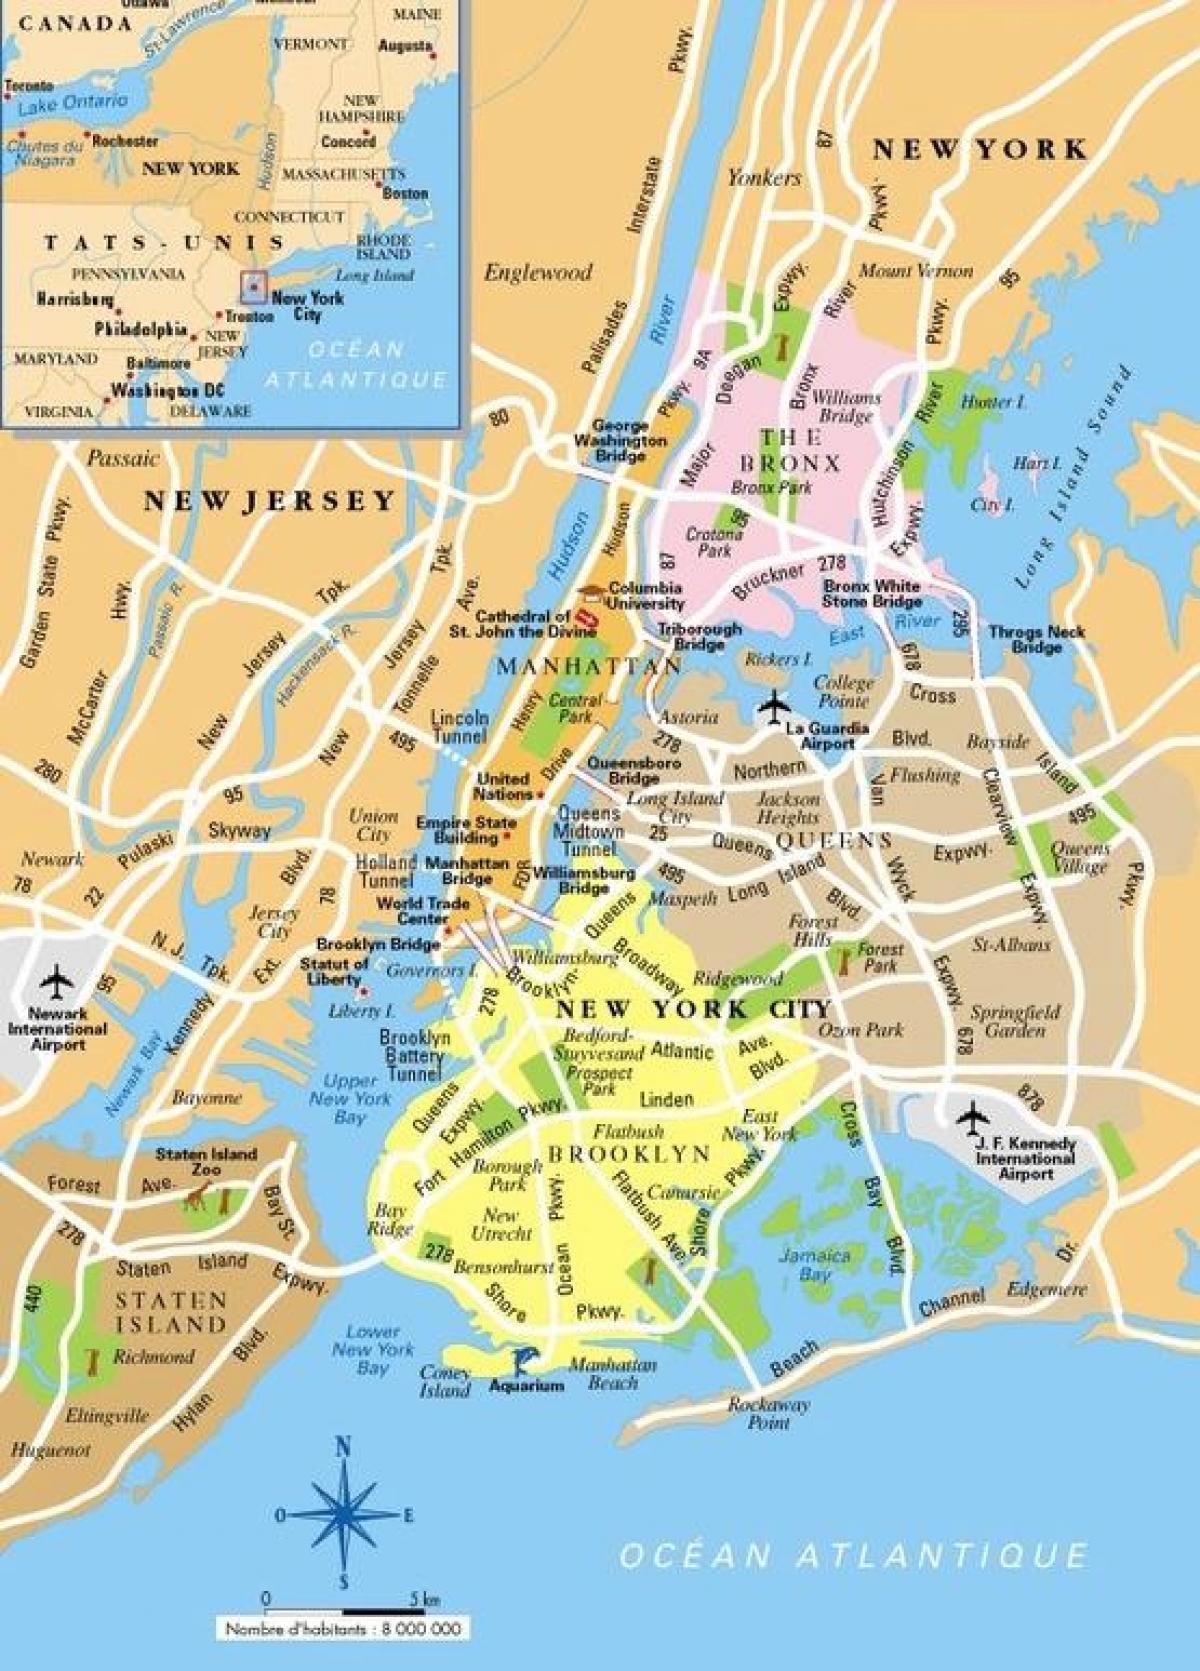 New York City New York map